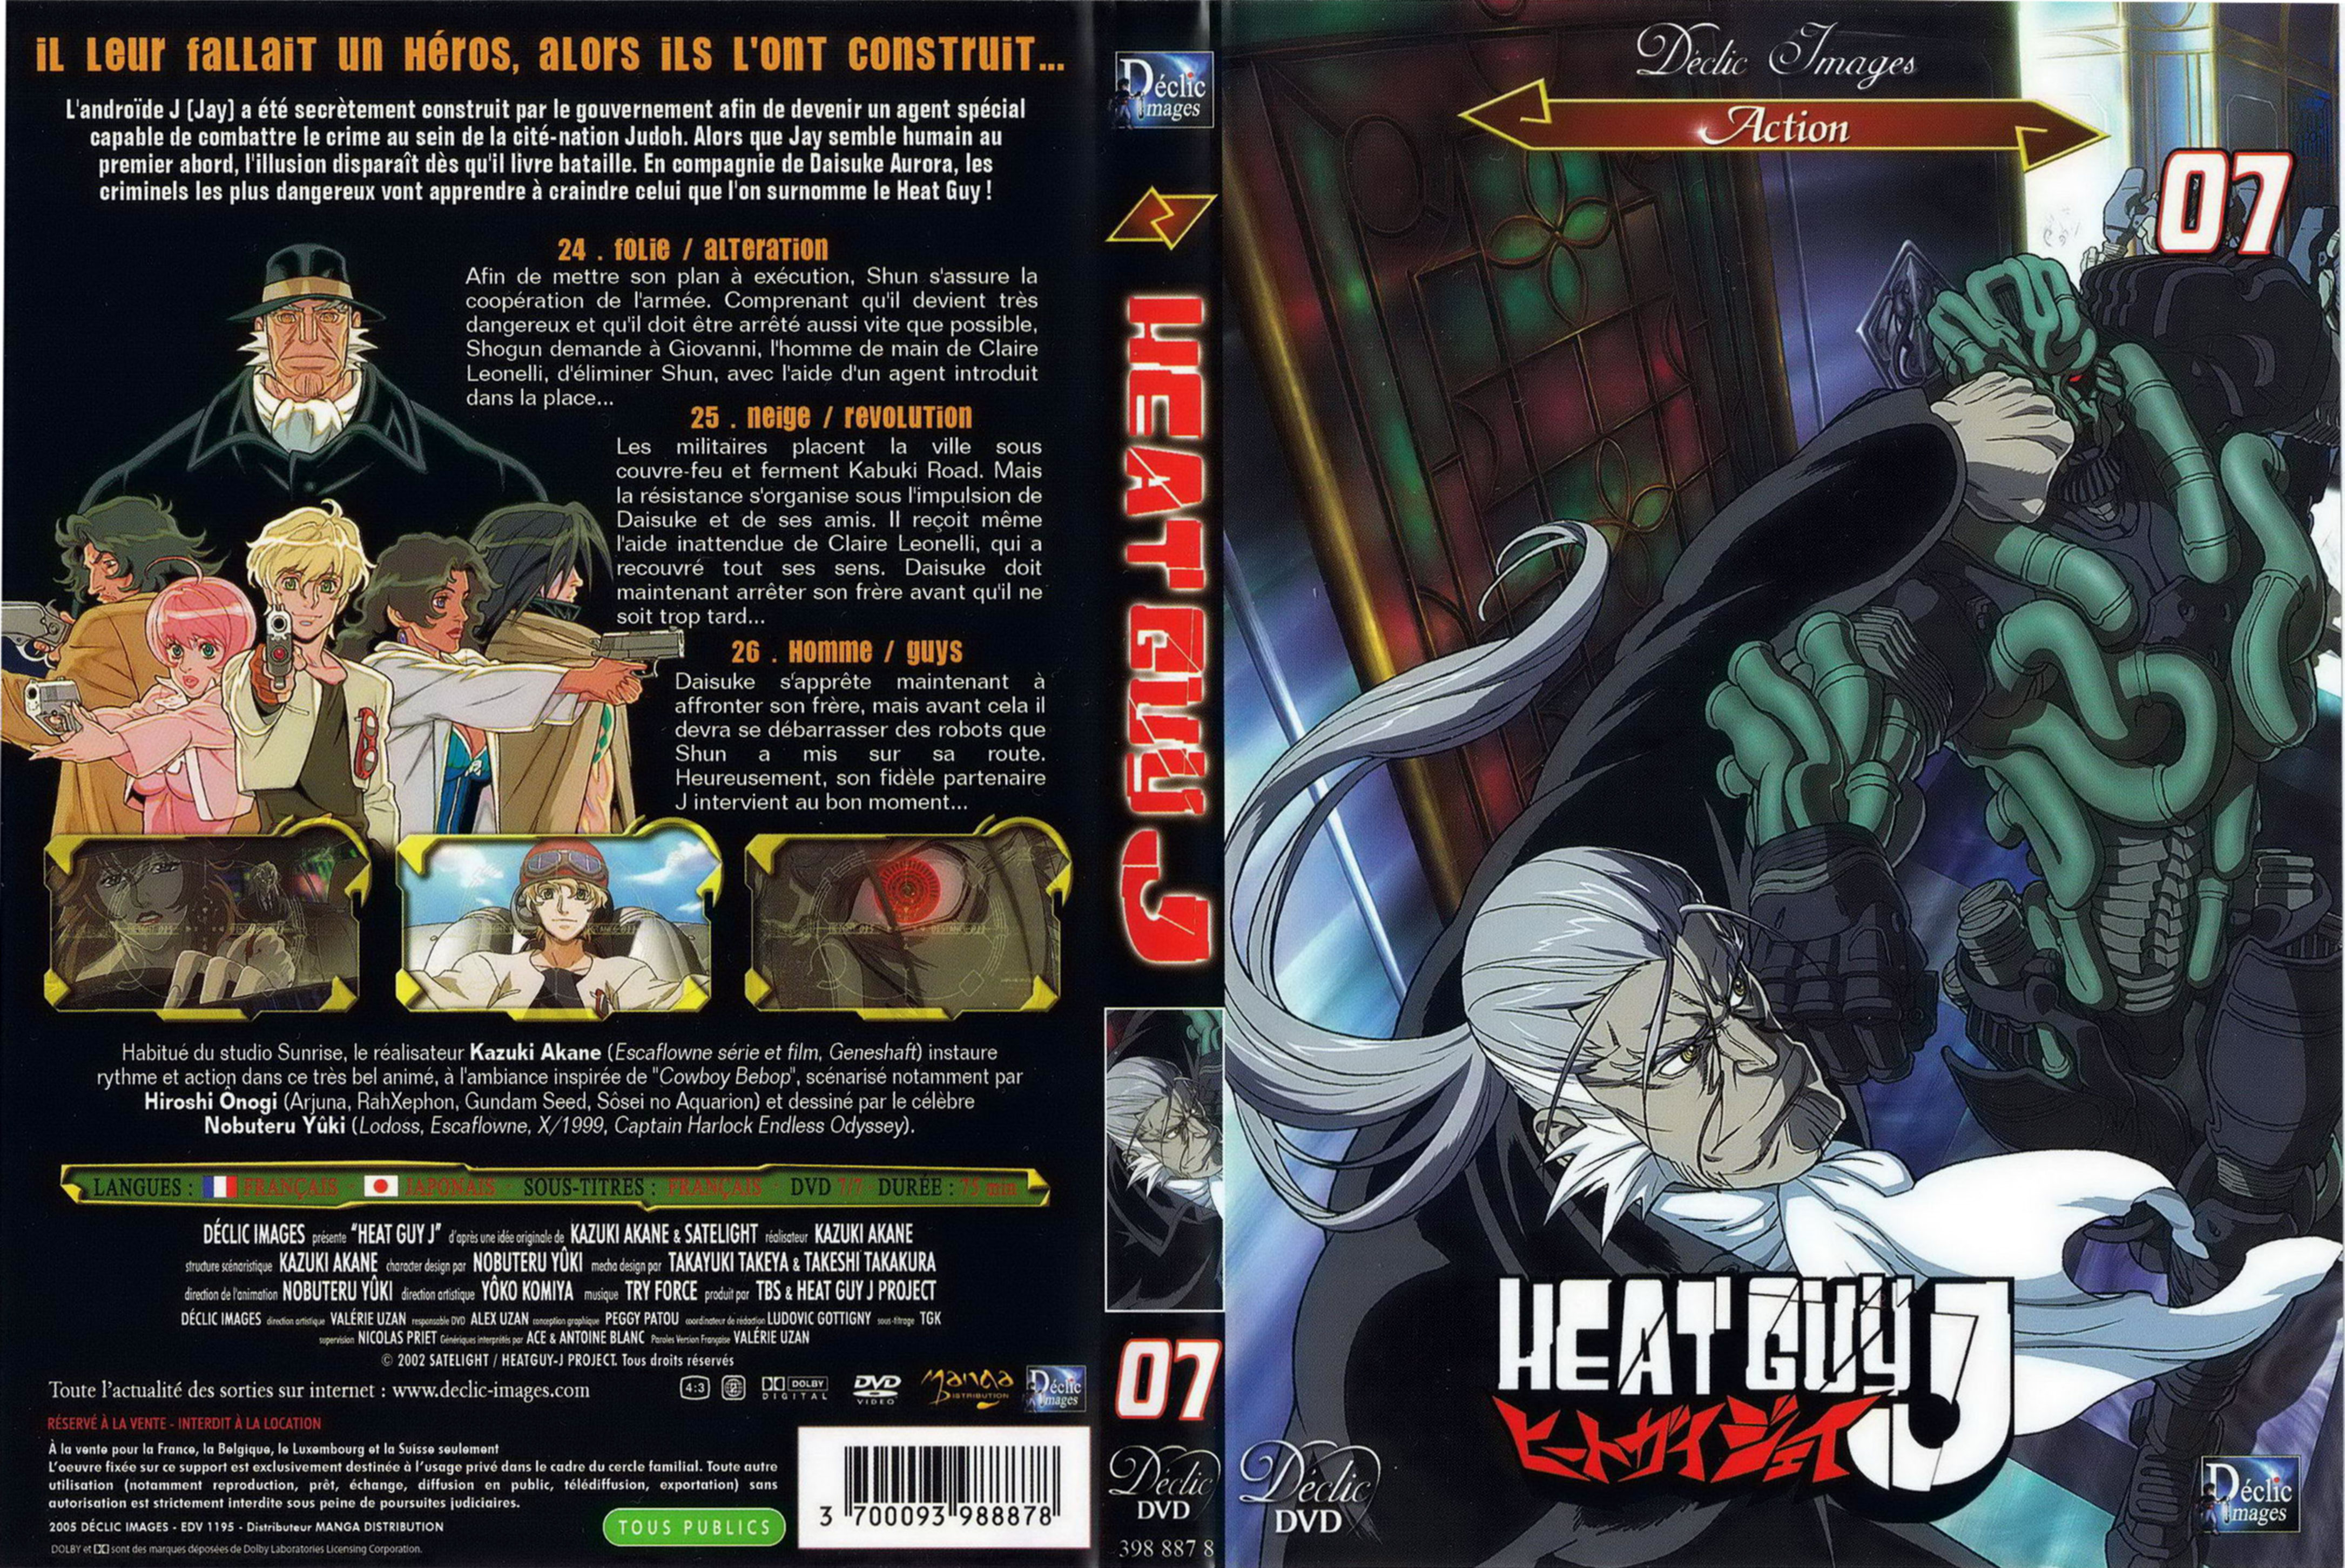 Jaquette DVD Heat guy J vol 07